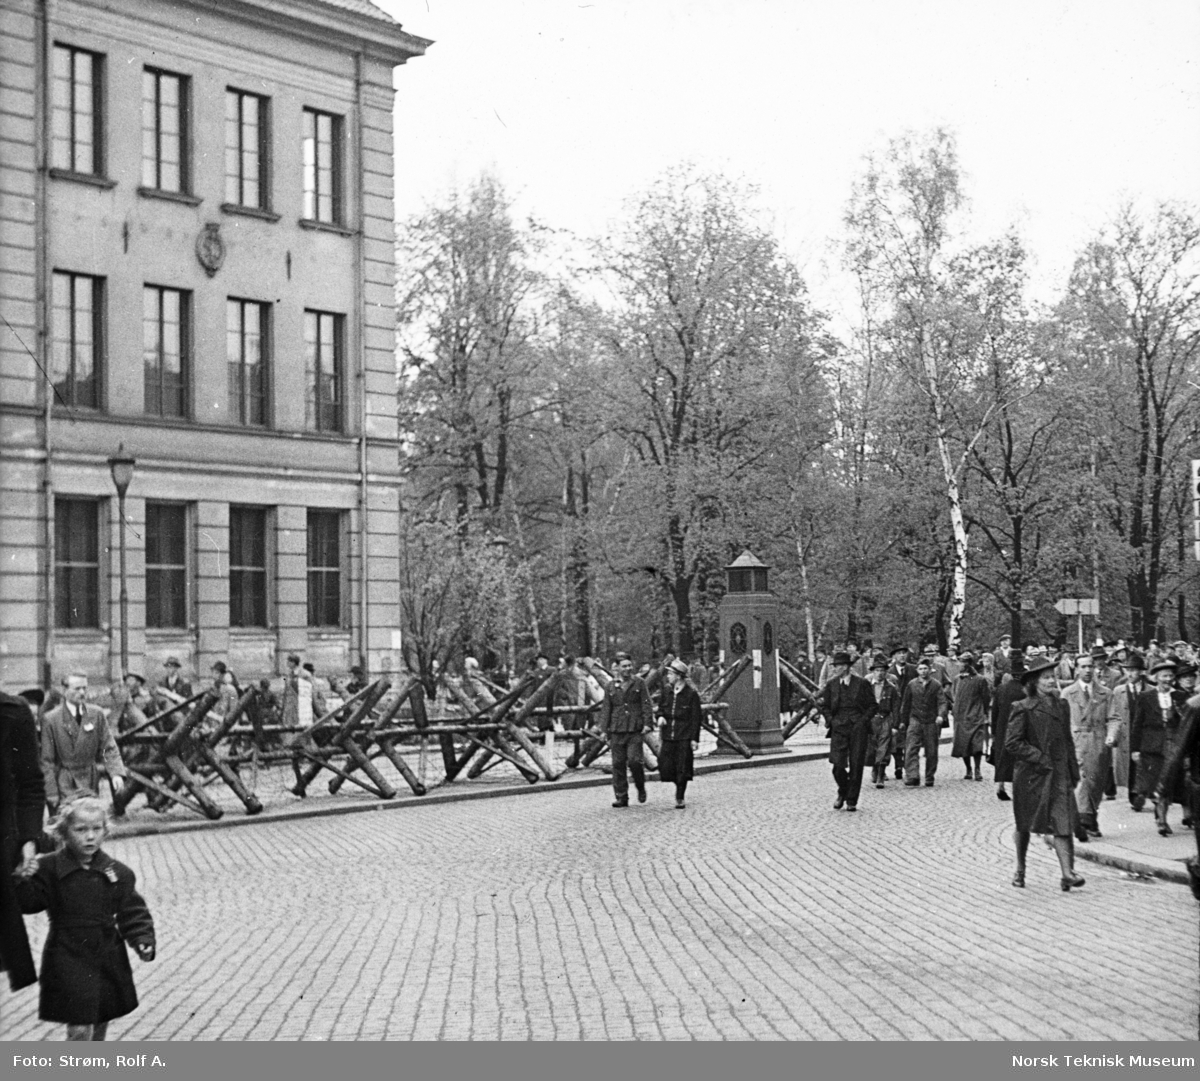 Folkemengde, trolig hjørnet Parkveien Slottsparken, barrikader mellom fortau og gate, Oslo, mai 1945,